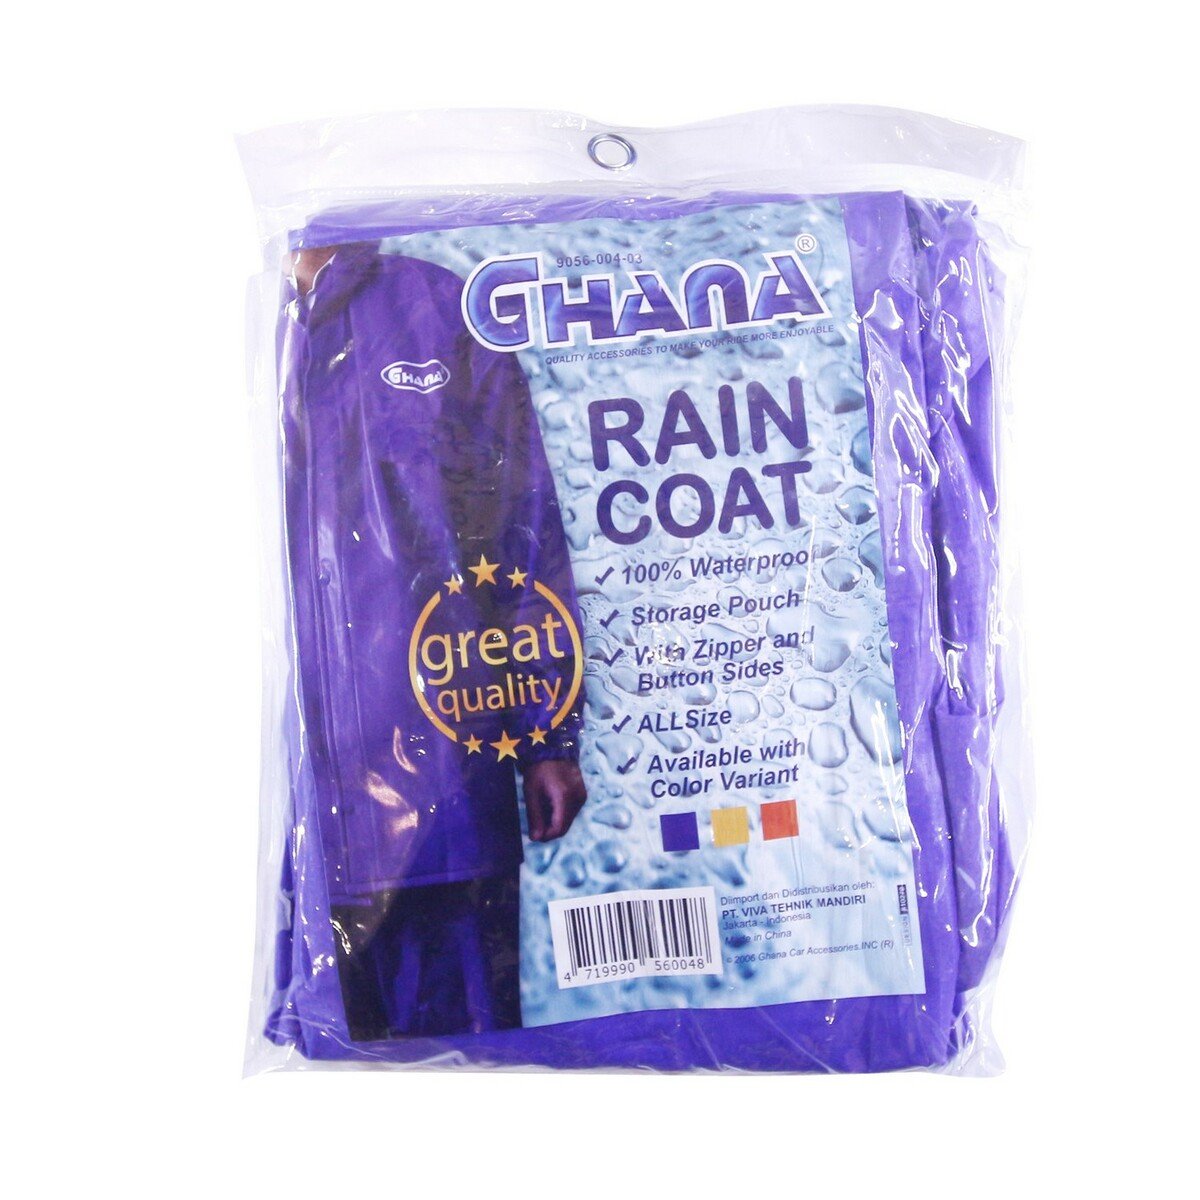 Kenmaster Ghana Rain Coat